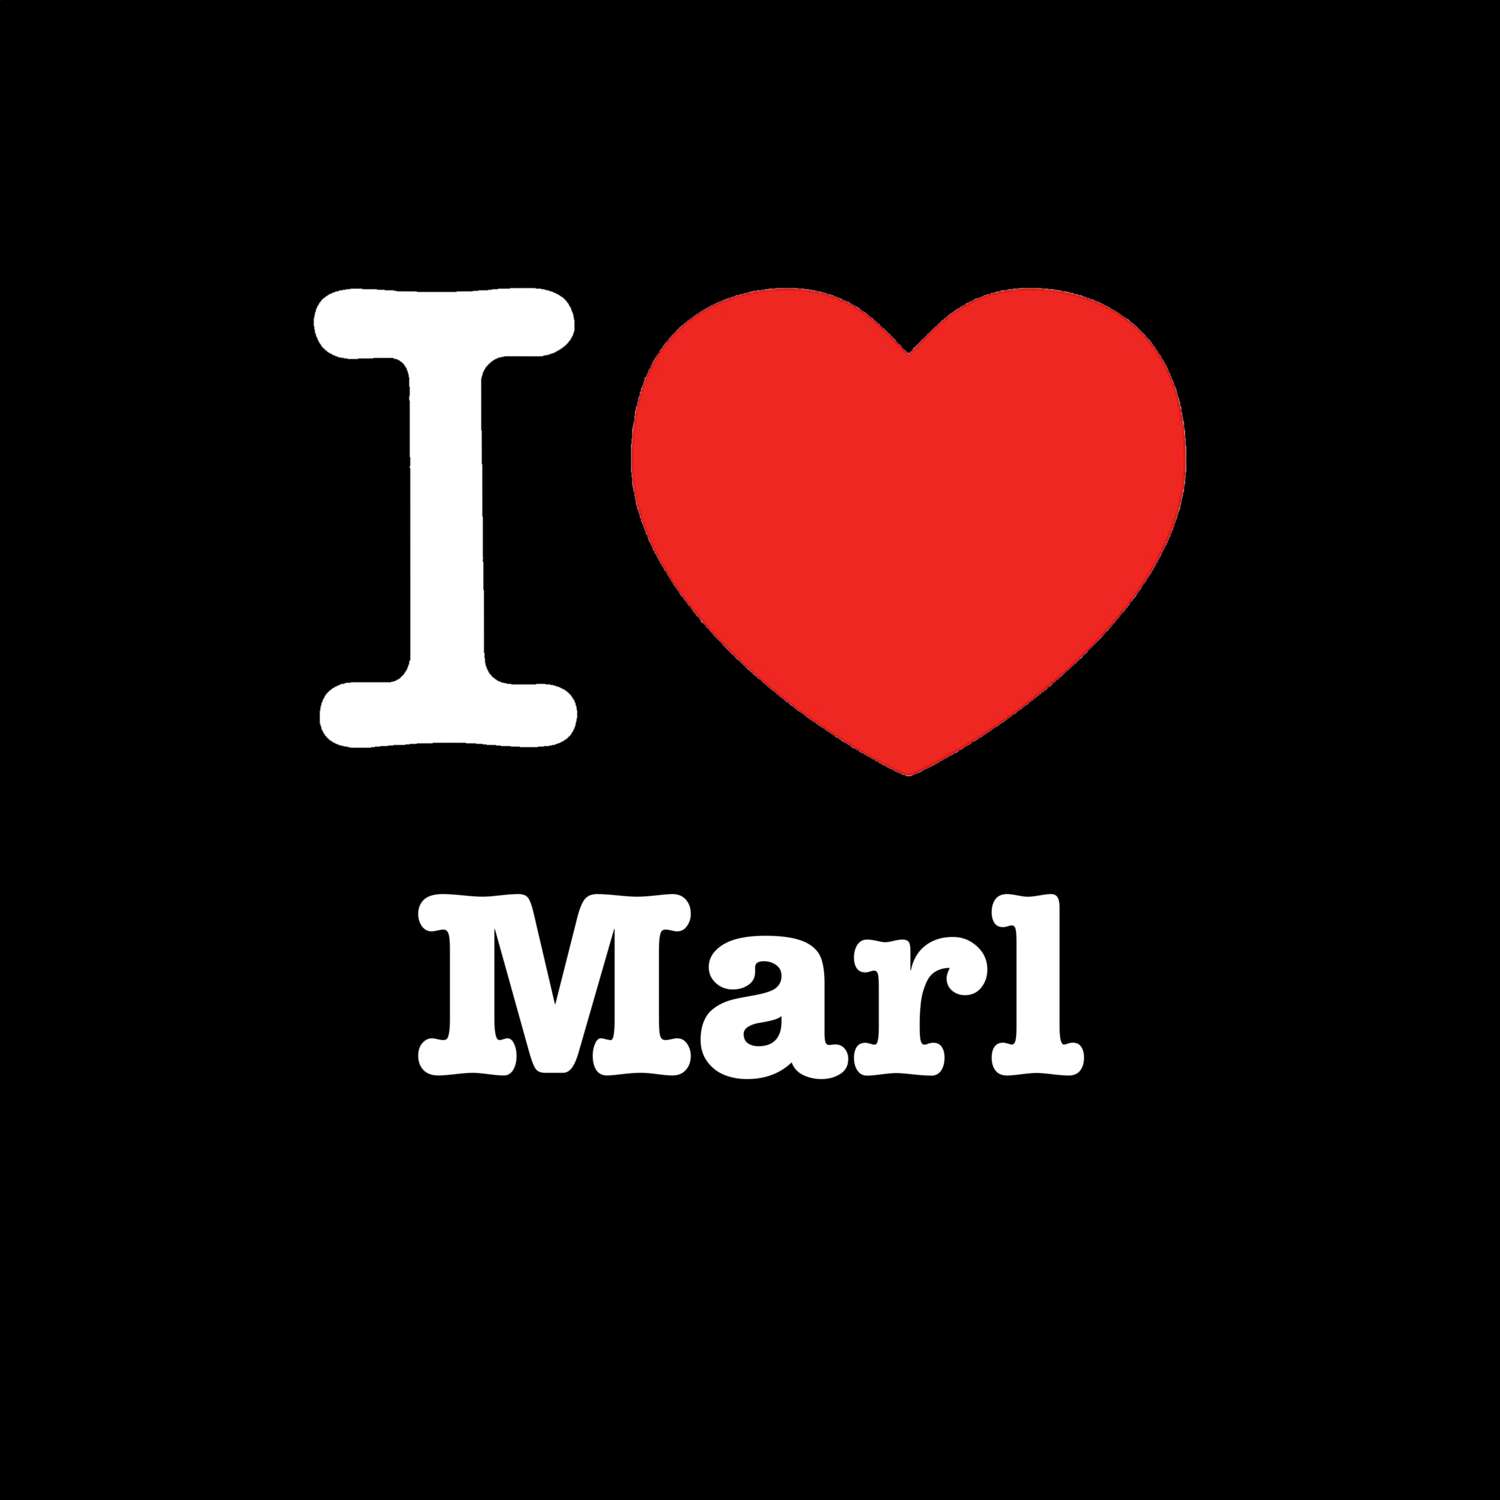 Marl T-Shirt »I love«